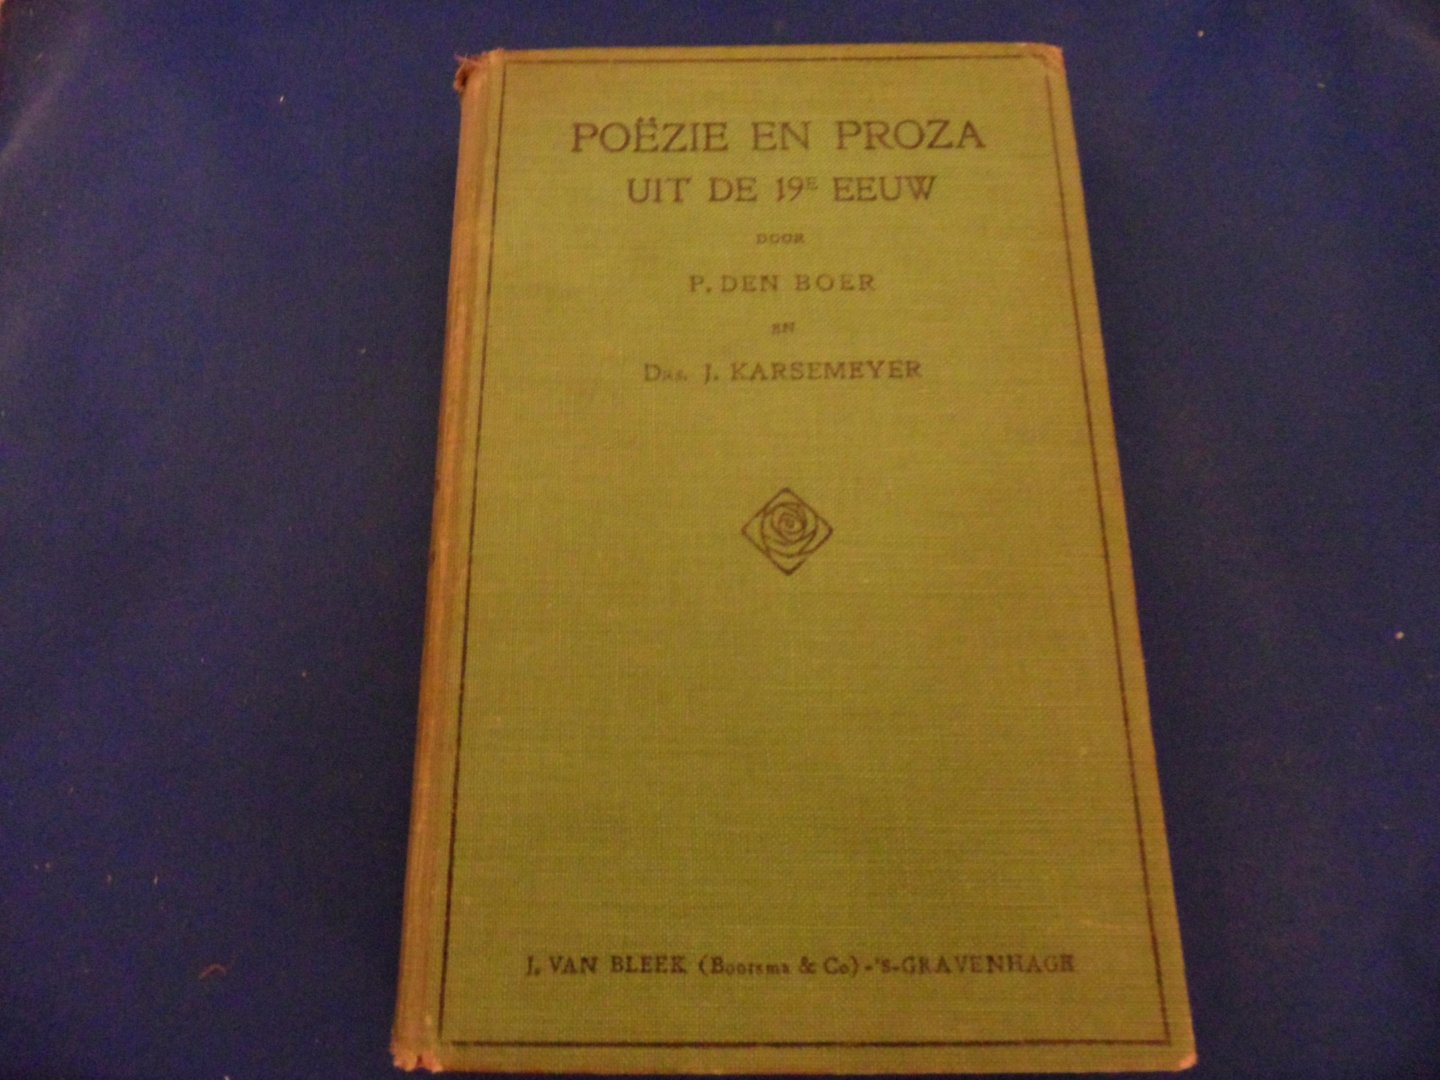 Boer, P. den en Karsemeijer, drs. J. - Poëzie en proza uit de 19e eeuw